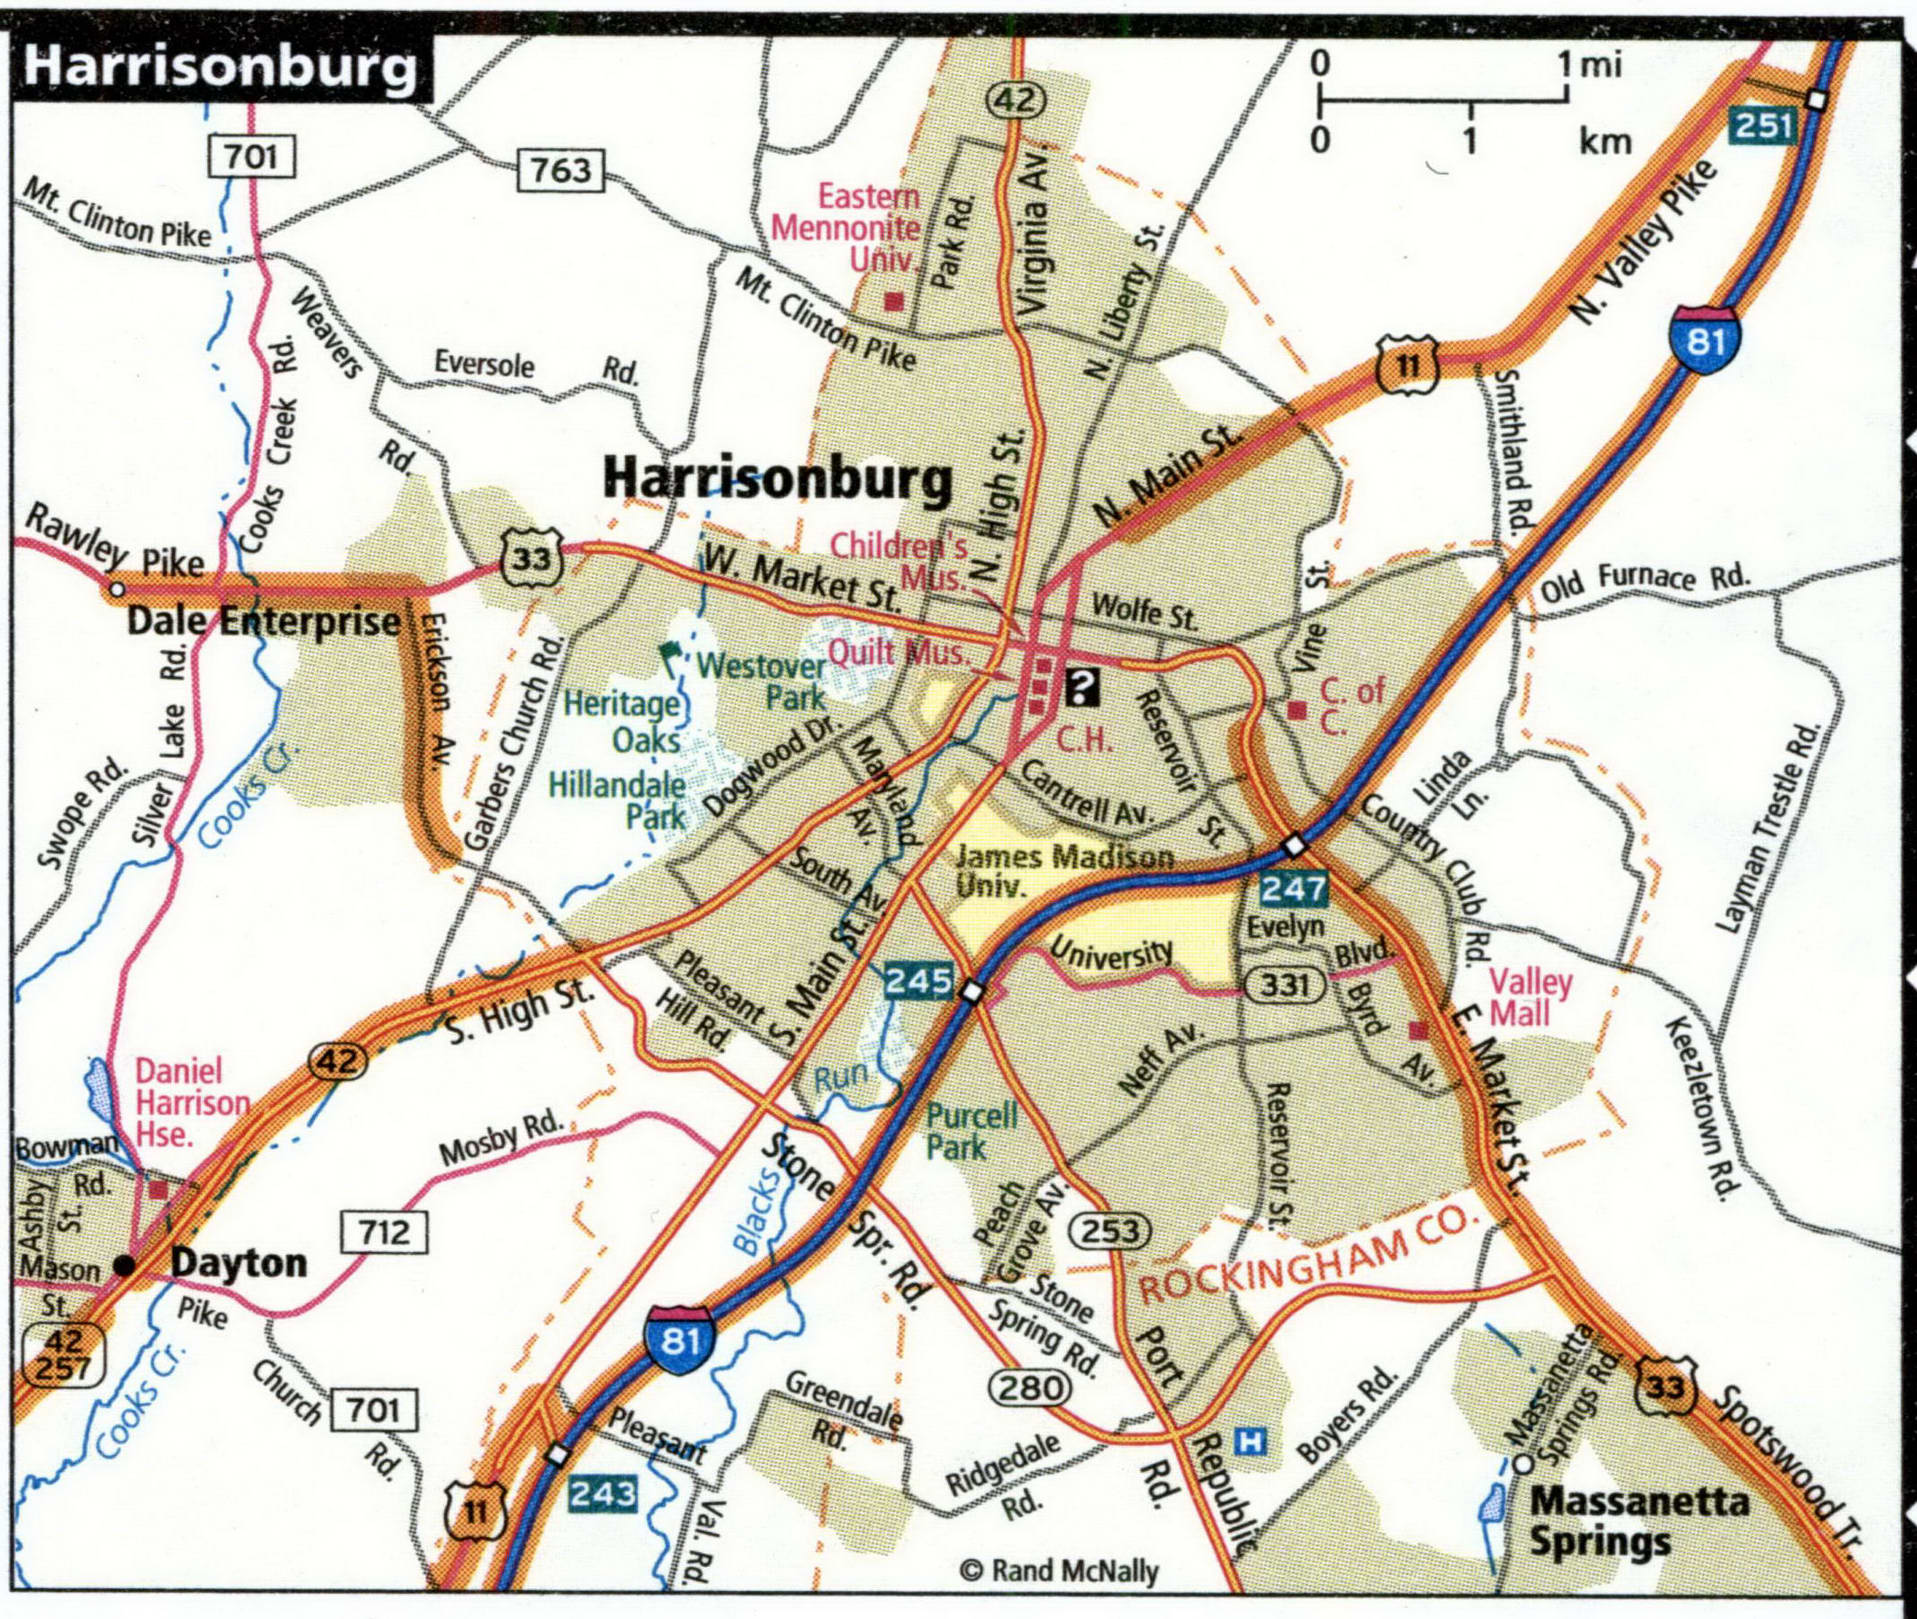 Harrisonburg city map for truckers